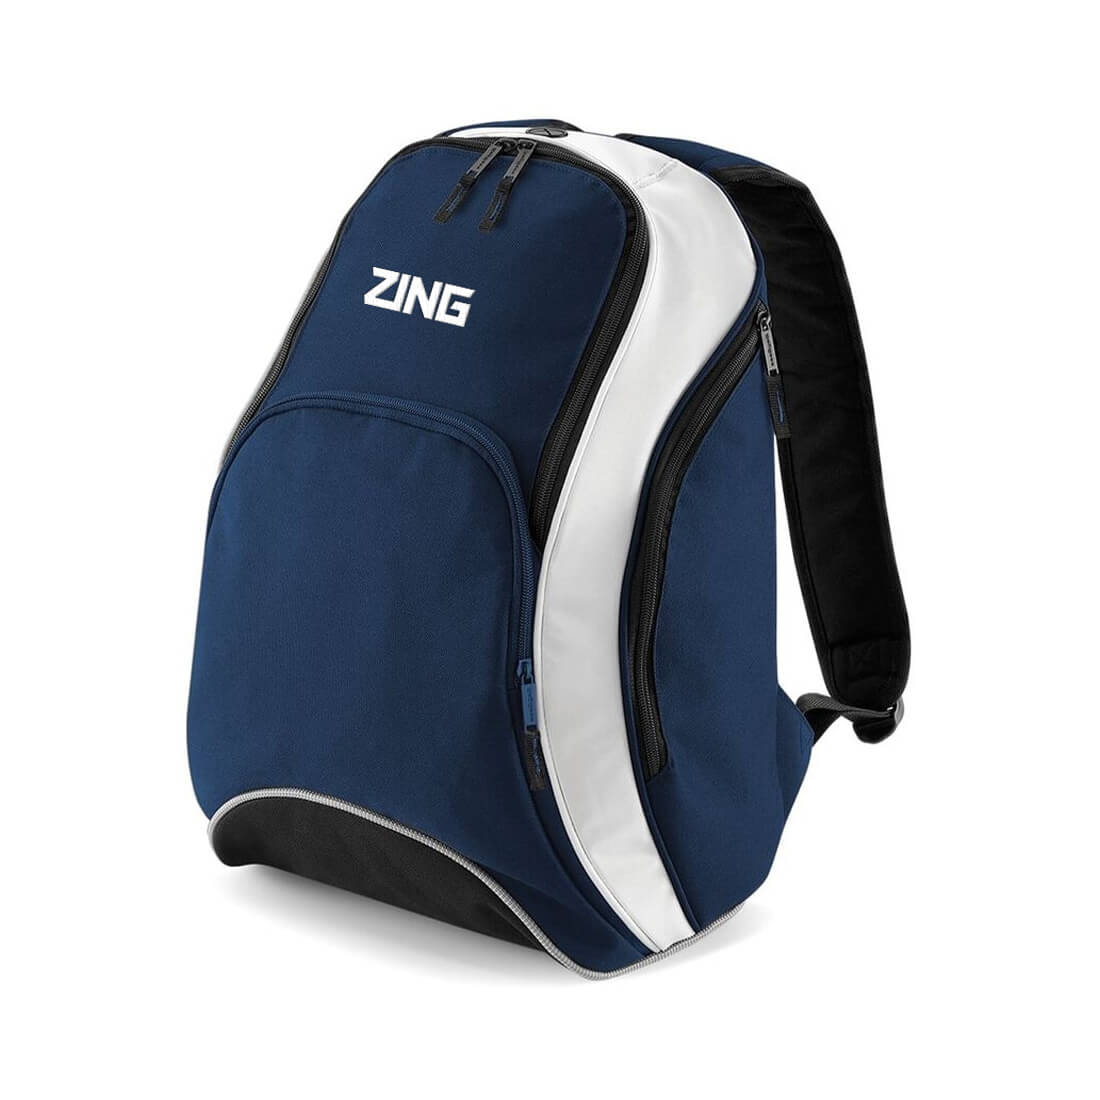 ZING Sportswear Team Rucksack | Training Kit and Teamwear – ZING - Navy and White